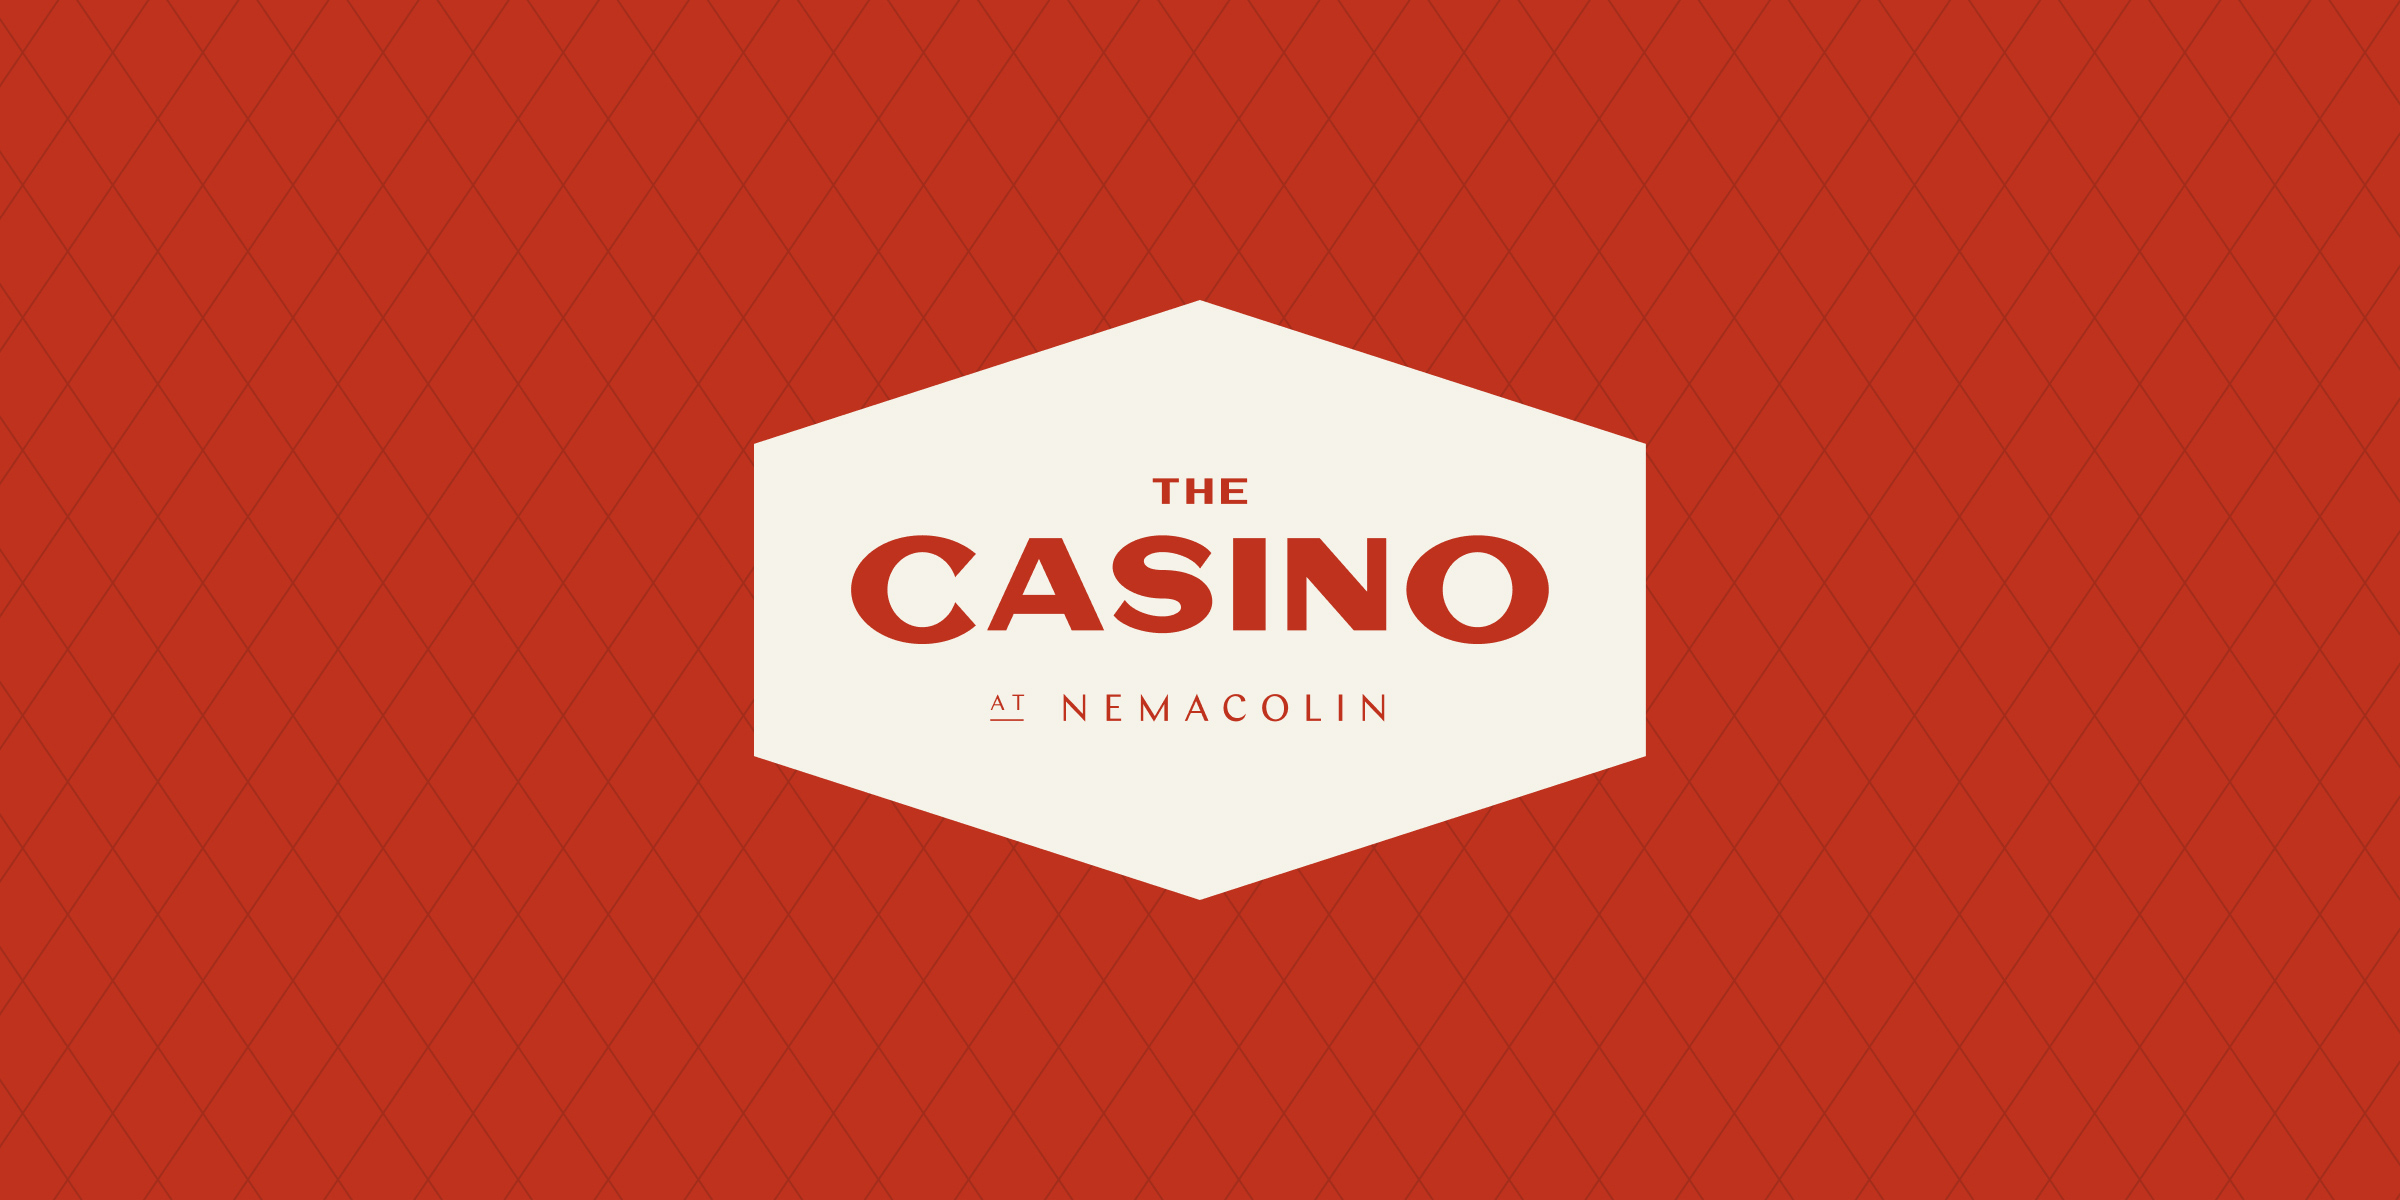 The Casino at Nemacolin